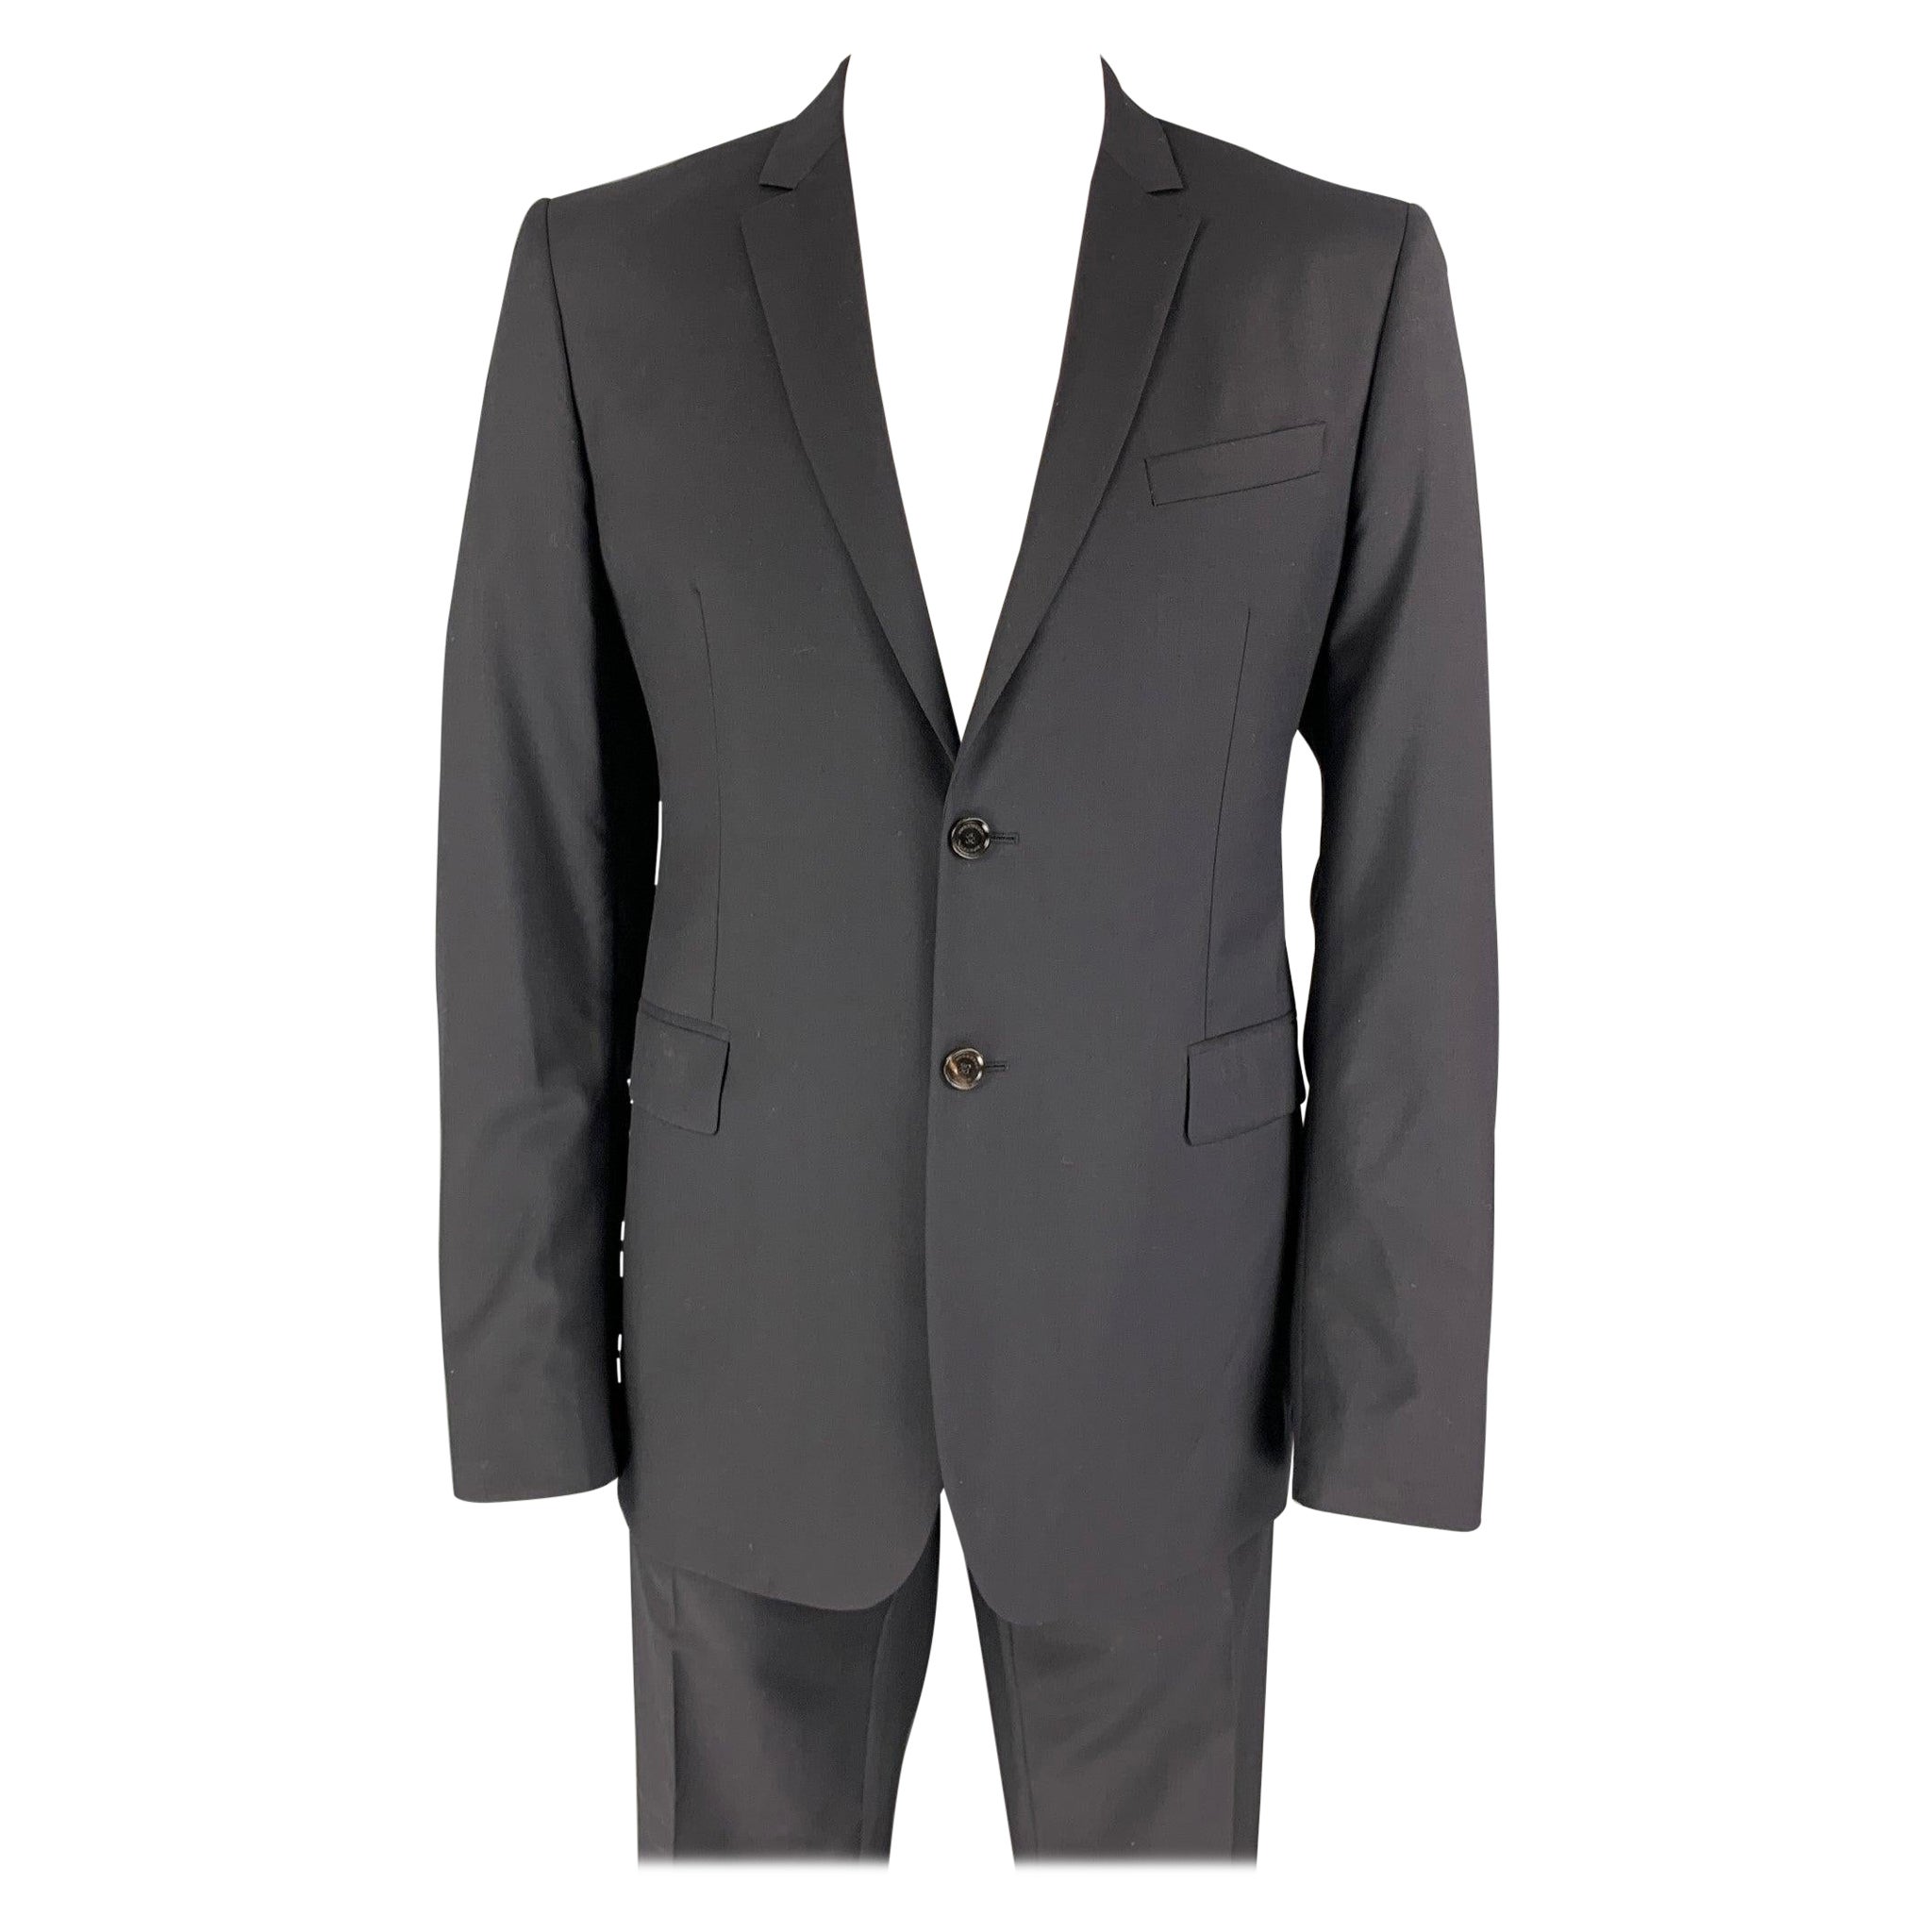 BURBERRY LONDON Size 46 Navy Wool Notch Lapel Suit For Sale